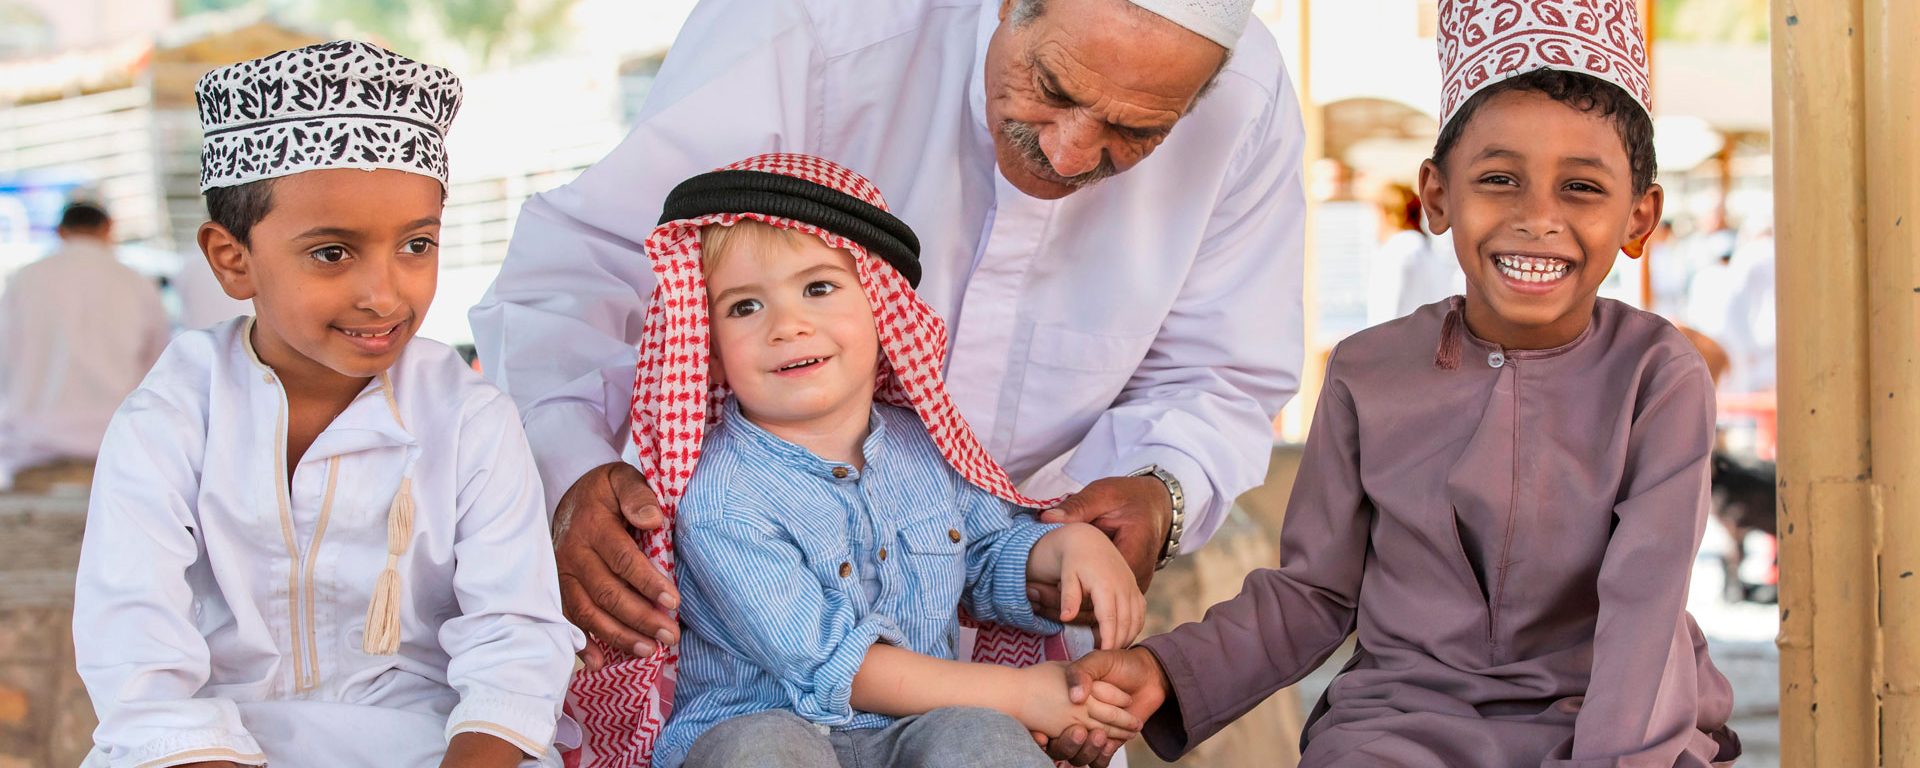 An Omani man helps a young European child shake hands with Omani children, Nizwa, Oman